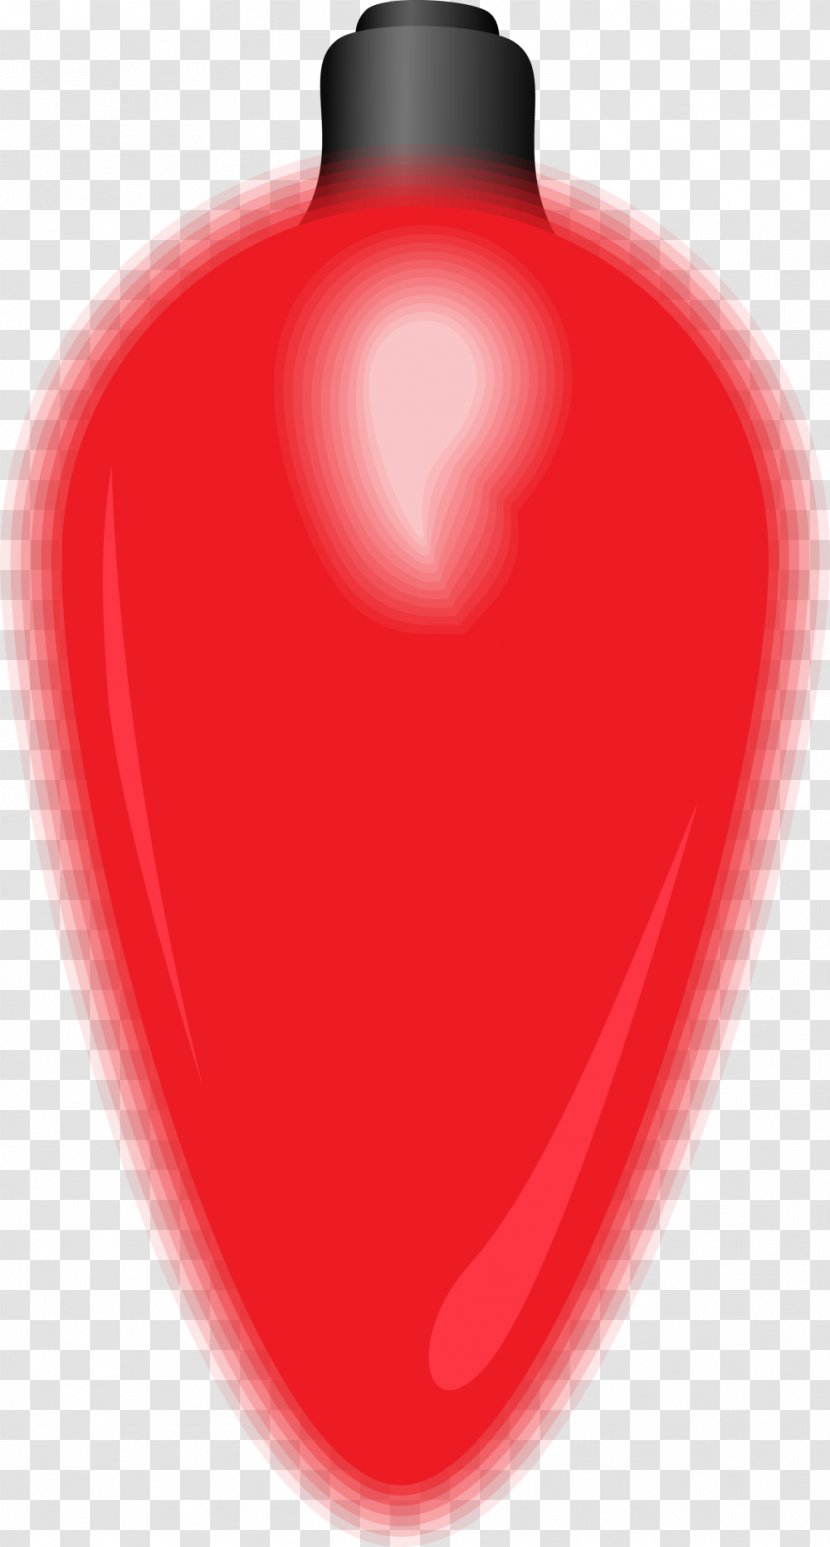 Heart - Little Fresh Red Light Bulb Transparent PNG